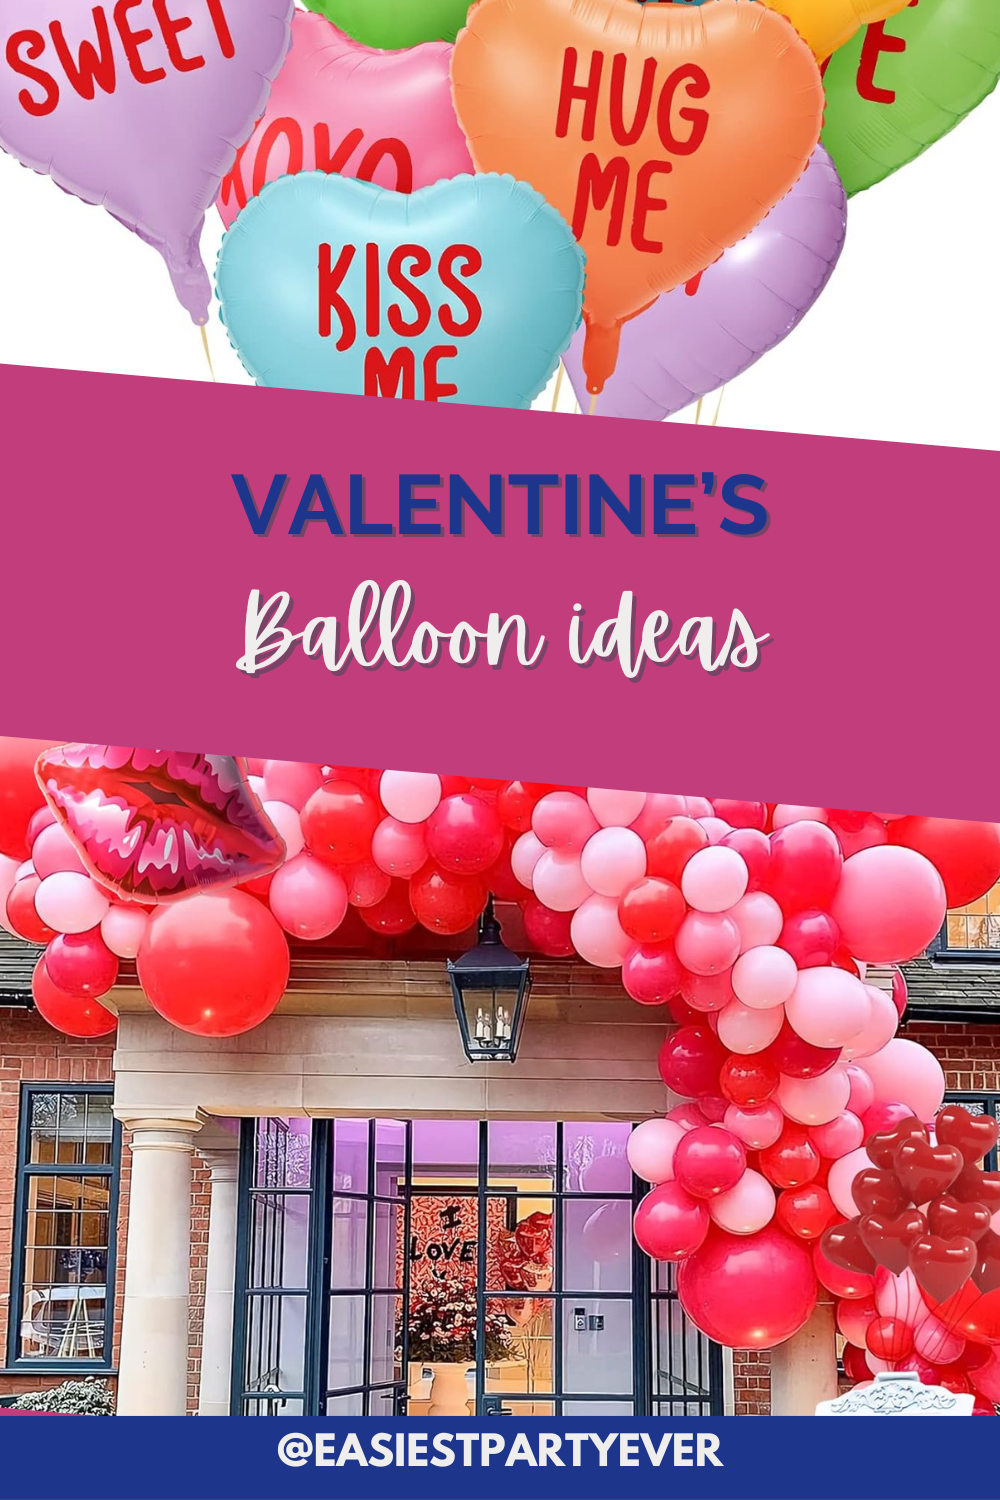 Swoon-worthy Valentine’s balloon ideas